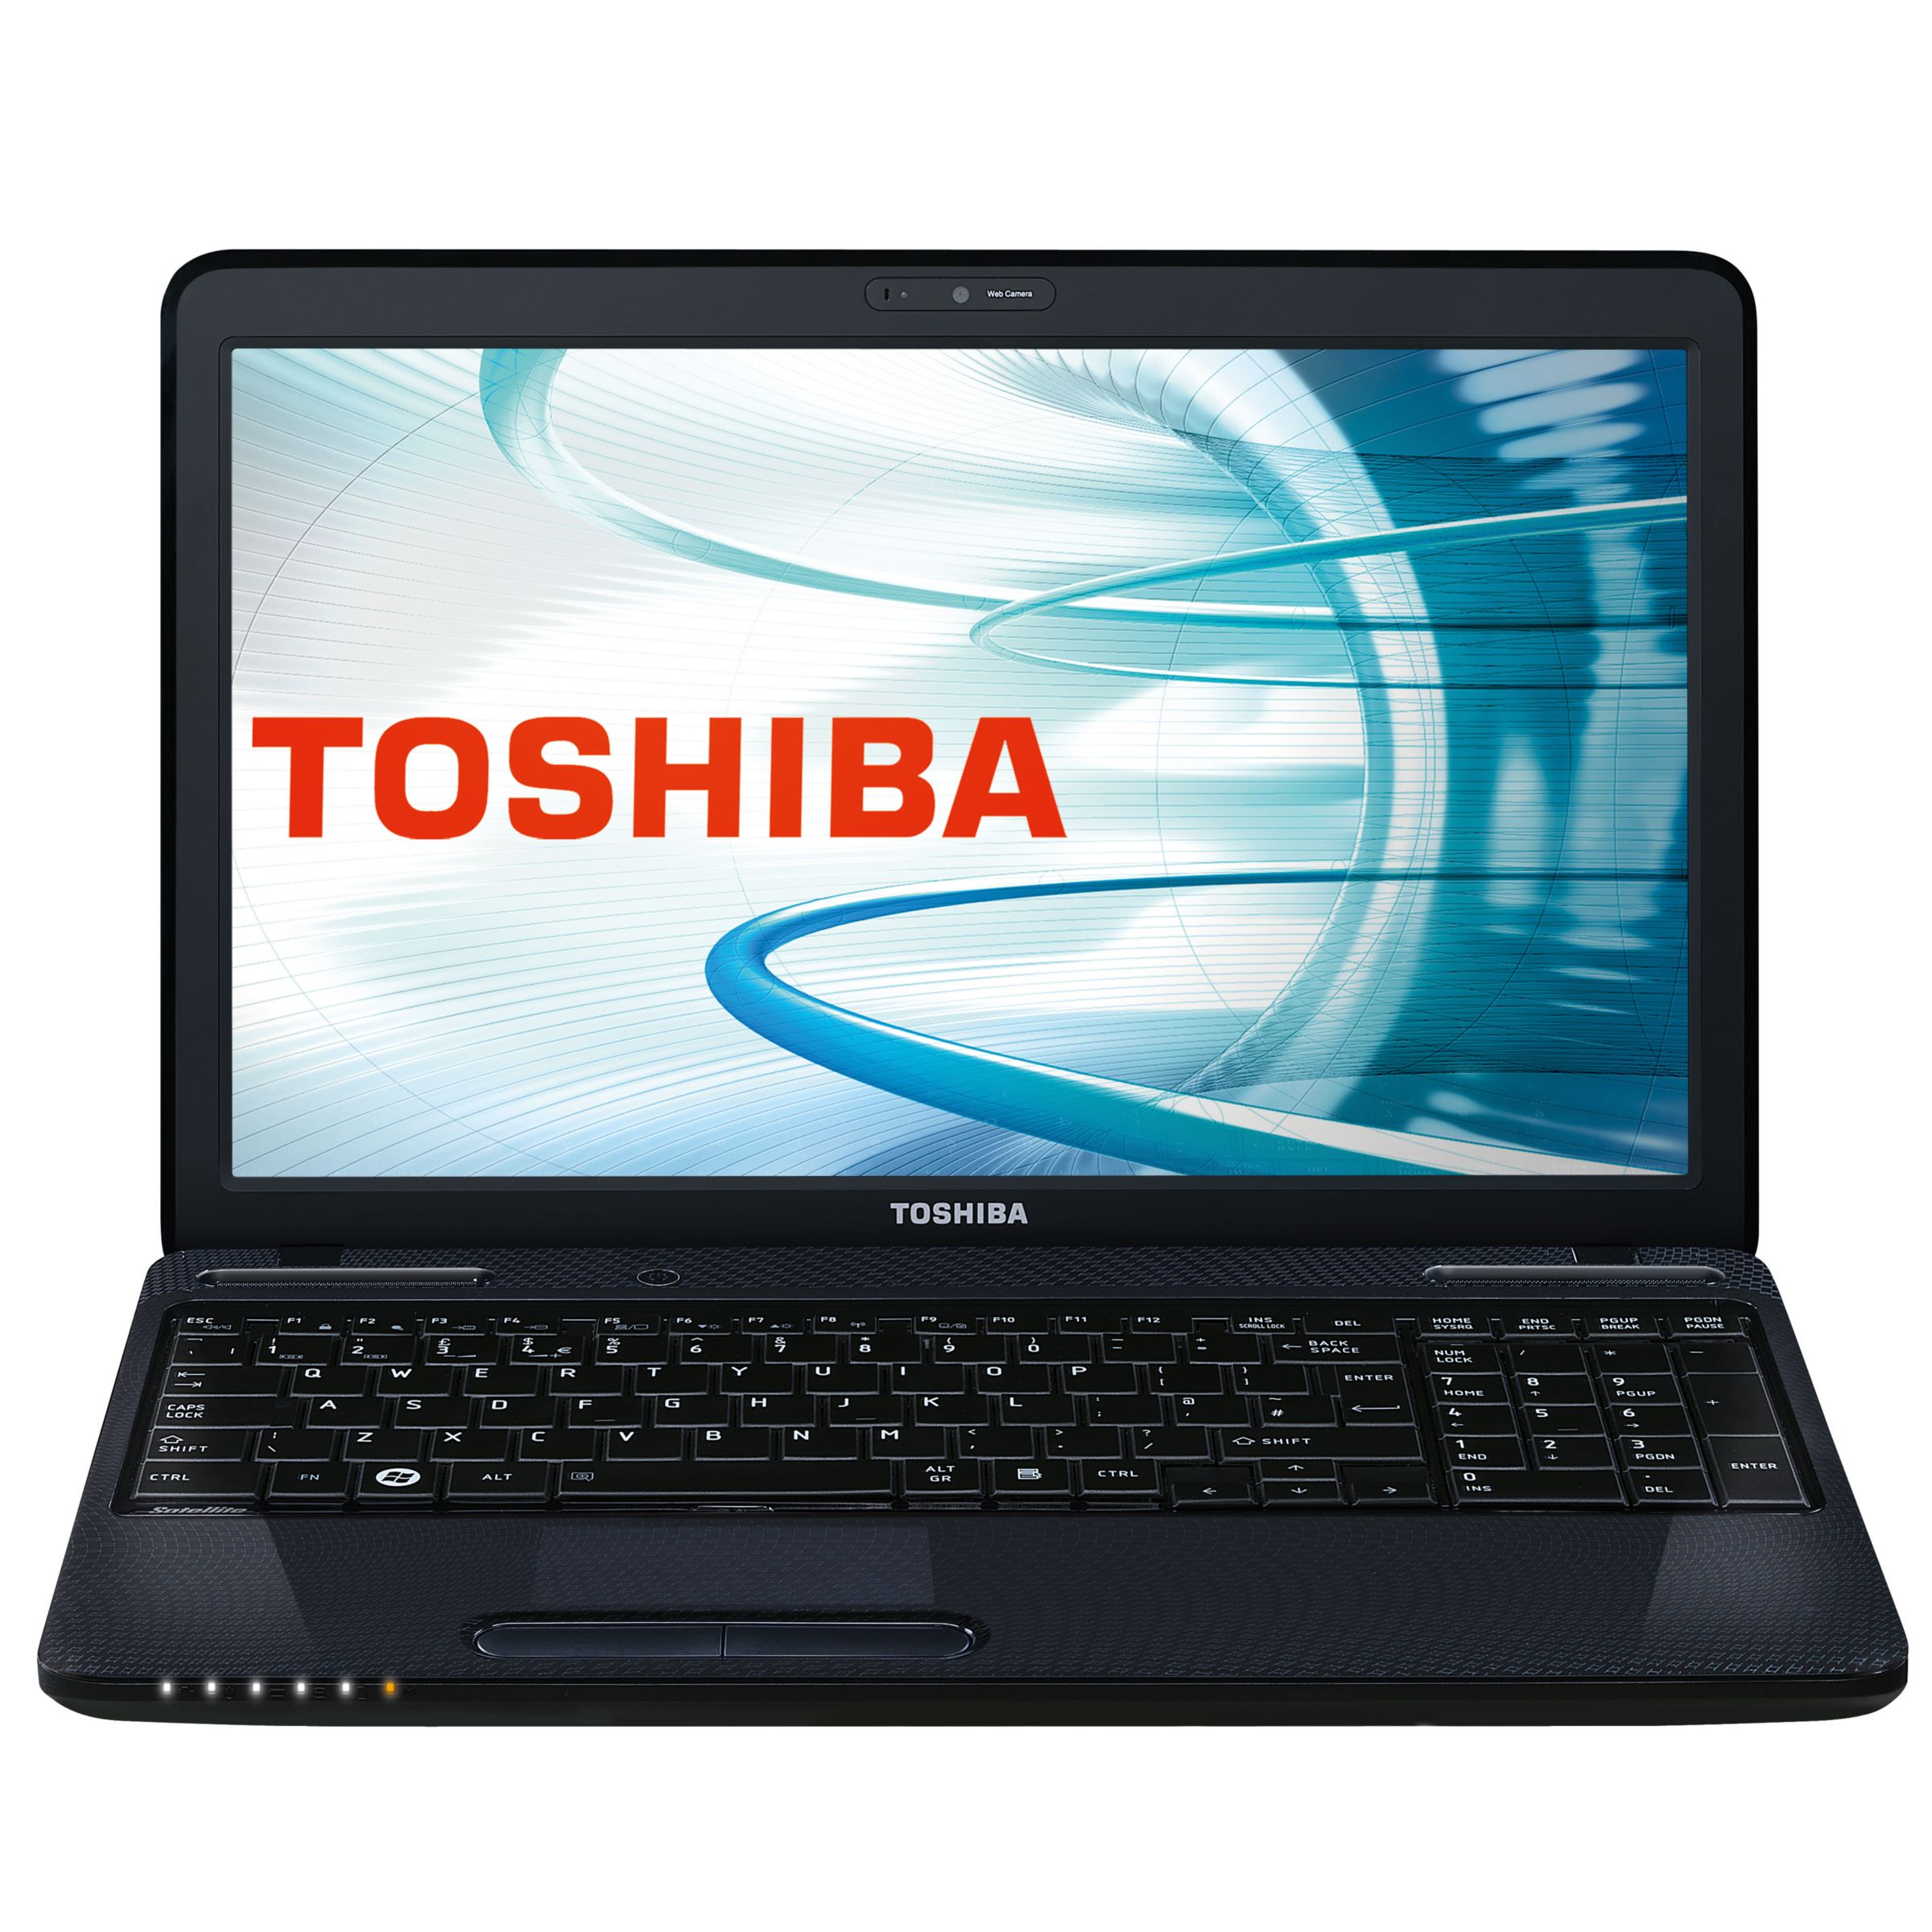 Toshiba Satellite L650D-123 Laptop, AMD Phenom, 500GB, 2.2GHz, 4GB RAM with 15.6 Inch Display at John Lewis